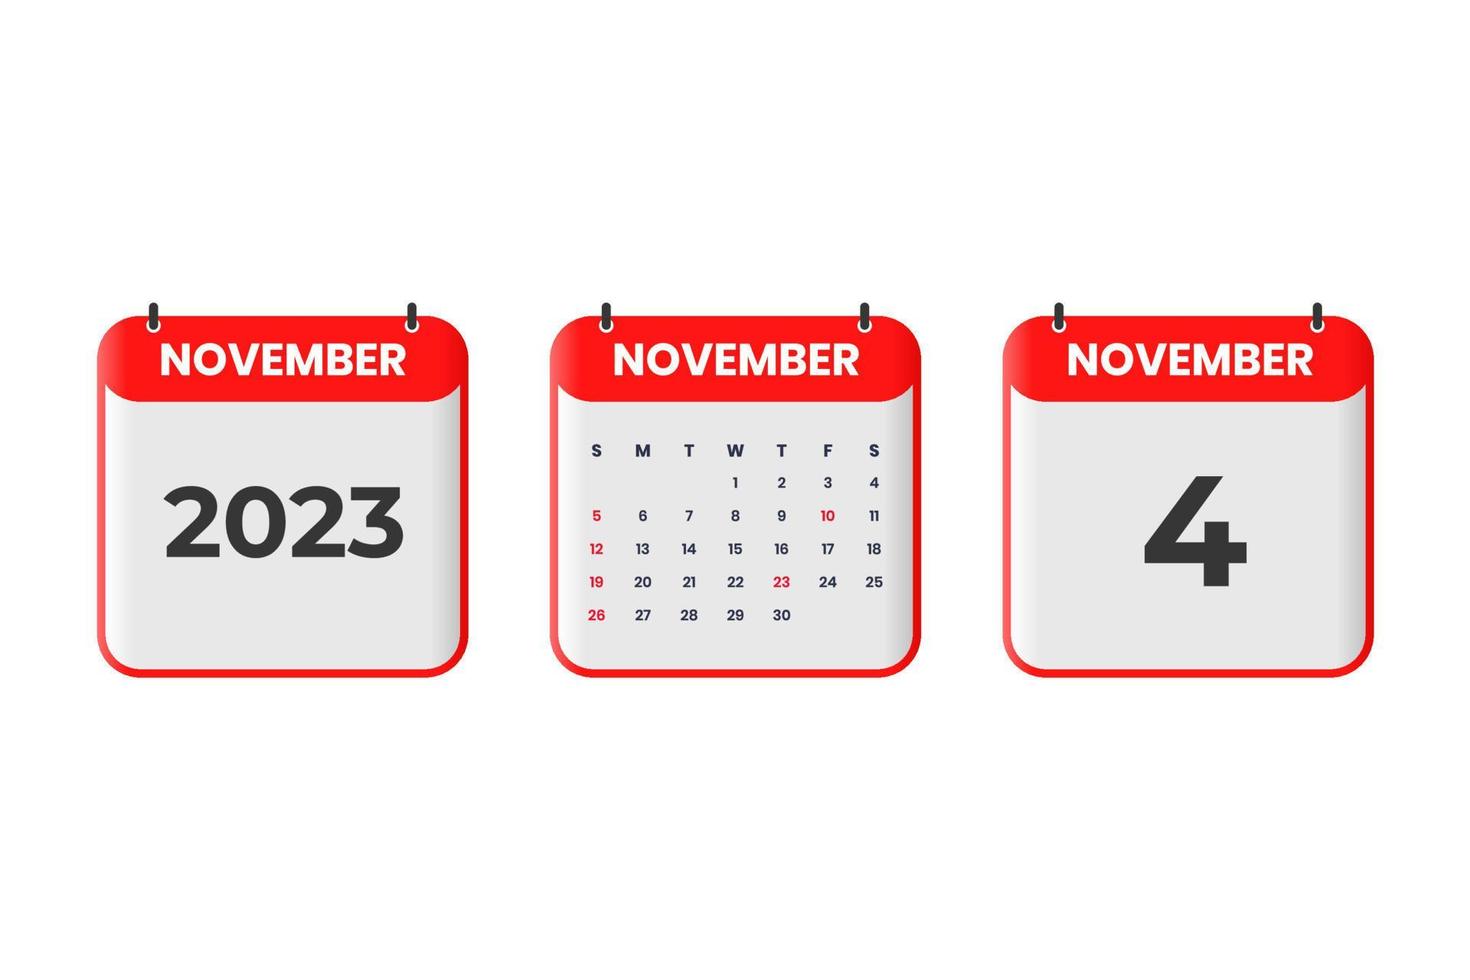 novembre 2023 calendario design. 4 ° novembre 2023 calendario icona per orario, appuntamento, importante Data concetto vettore